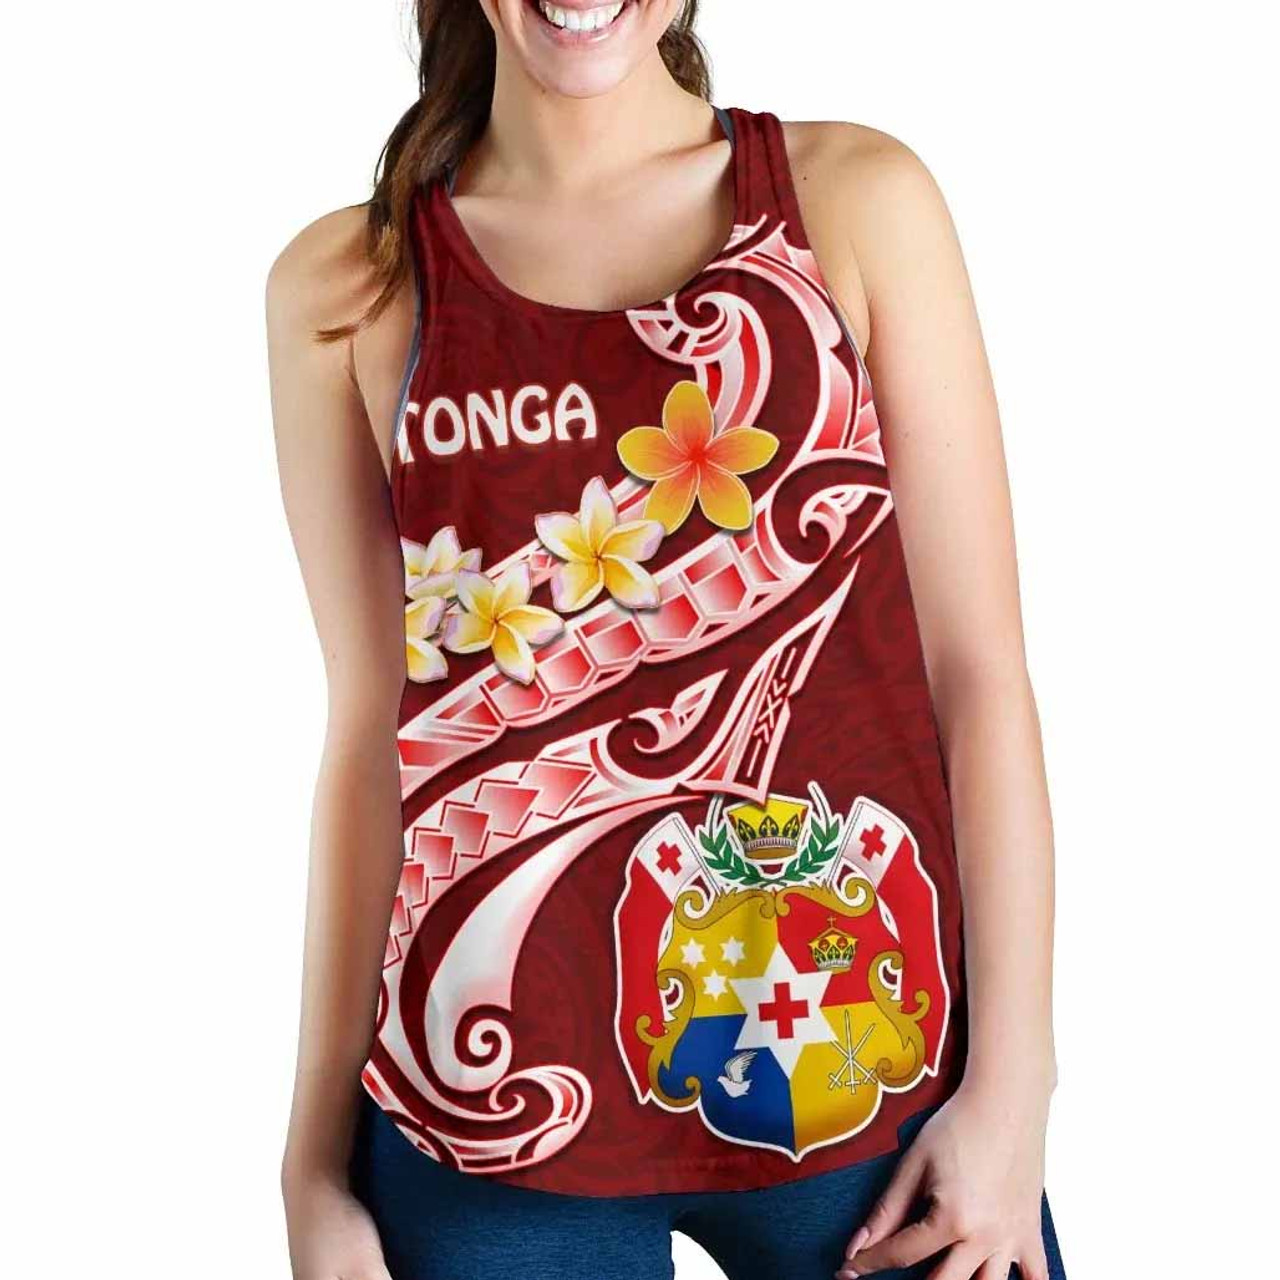 Tonga Women Racerback Tank - Tonga Coat Of Arms With Polynesian Patterns 3